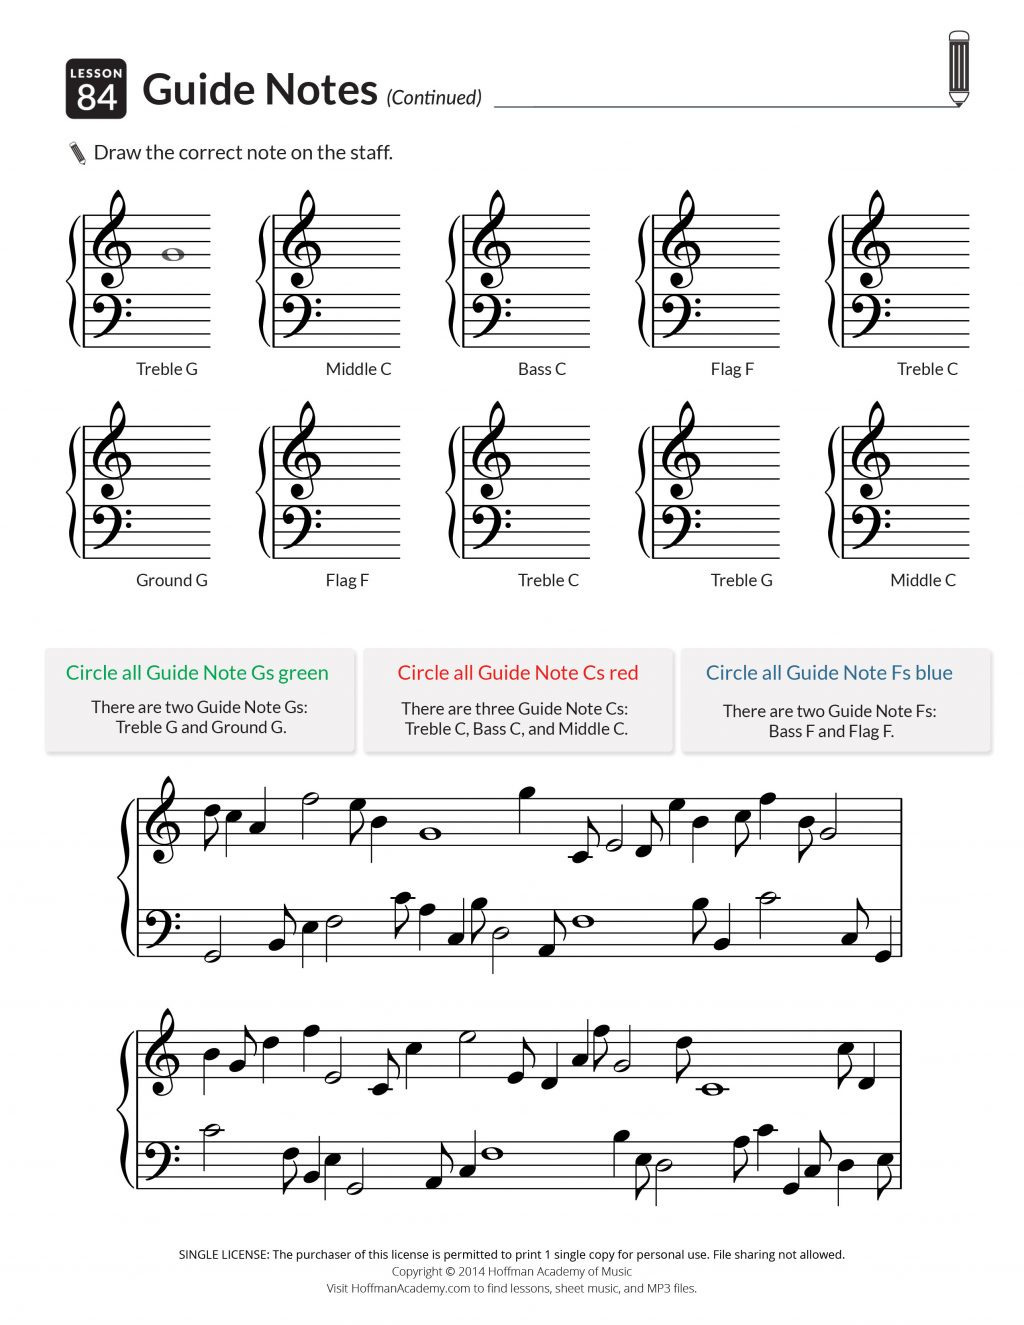 Beginner Piano Worksheets Db excel